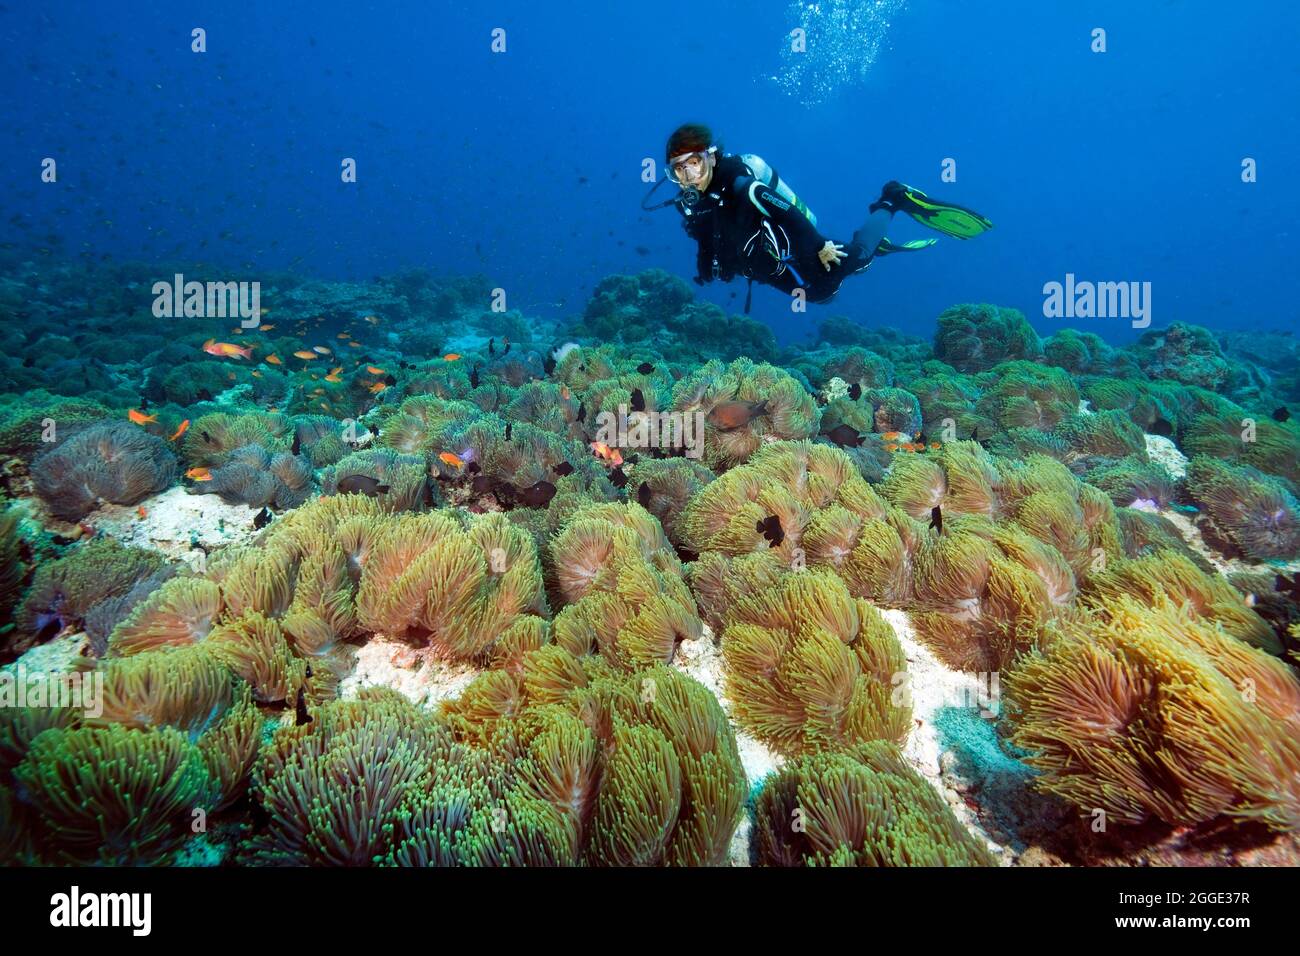 Colony of sebae anemones (Heteractis crispa) on seabed, diver behind, Indian Ocean, Maldives Stock Photo